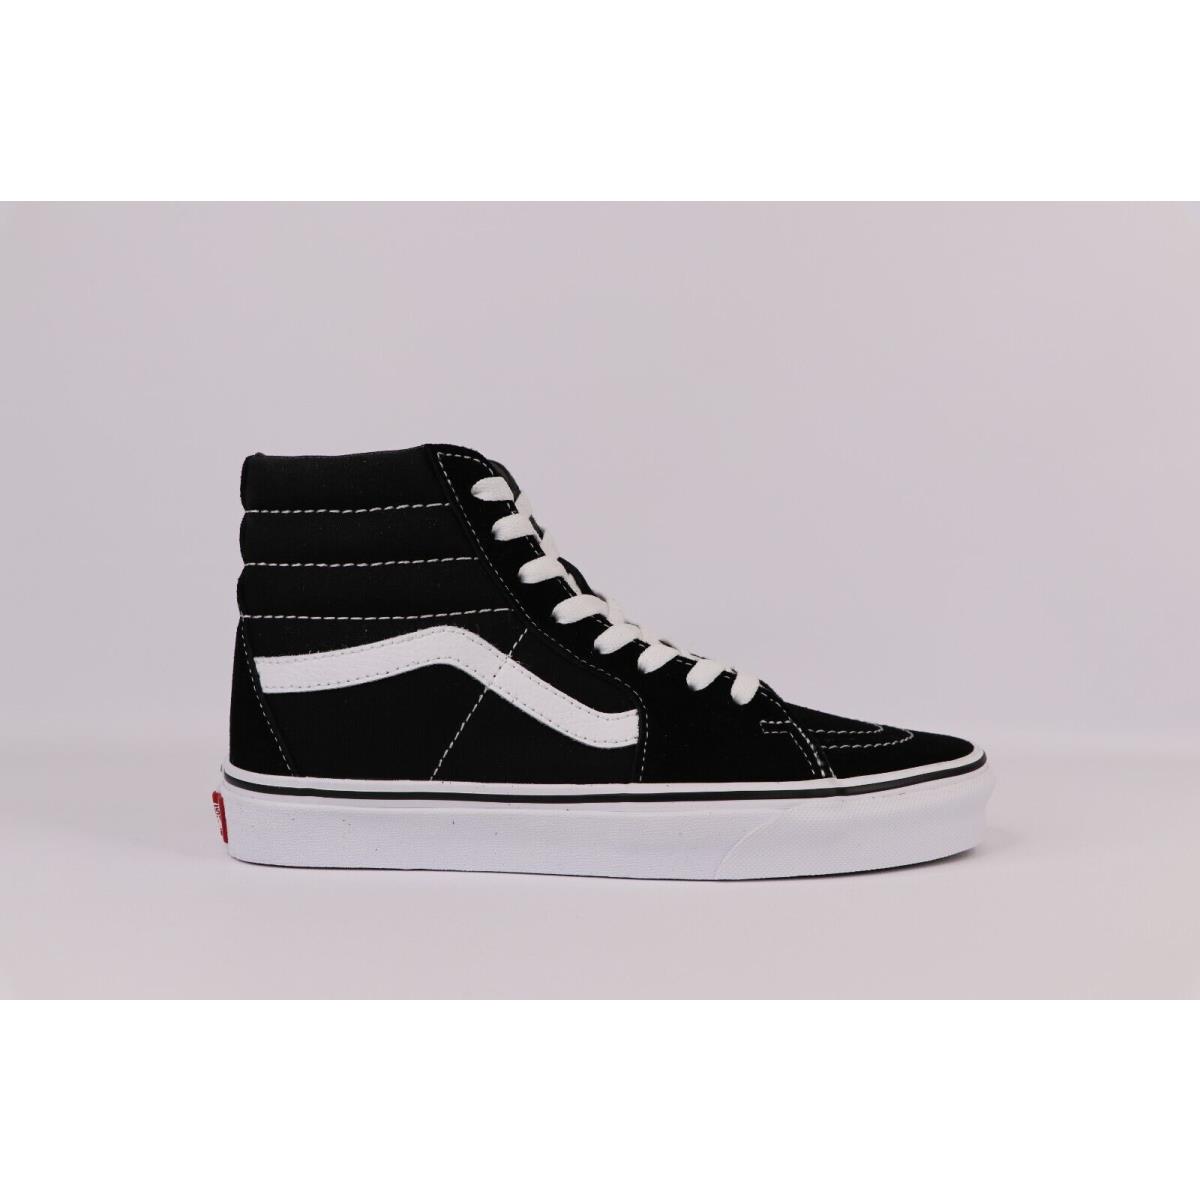 Vans SK8 HI Men/women Black Canvas High Top Skateboard Shoes Black/Black/White